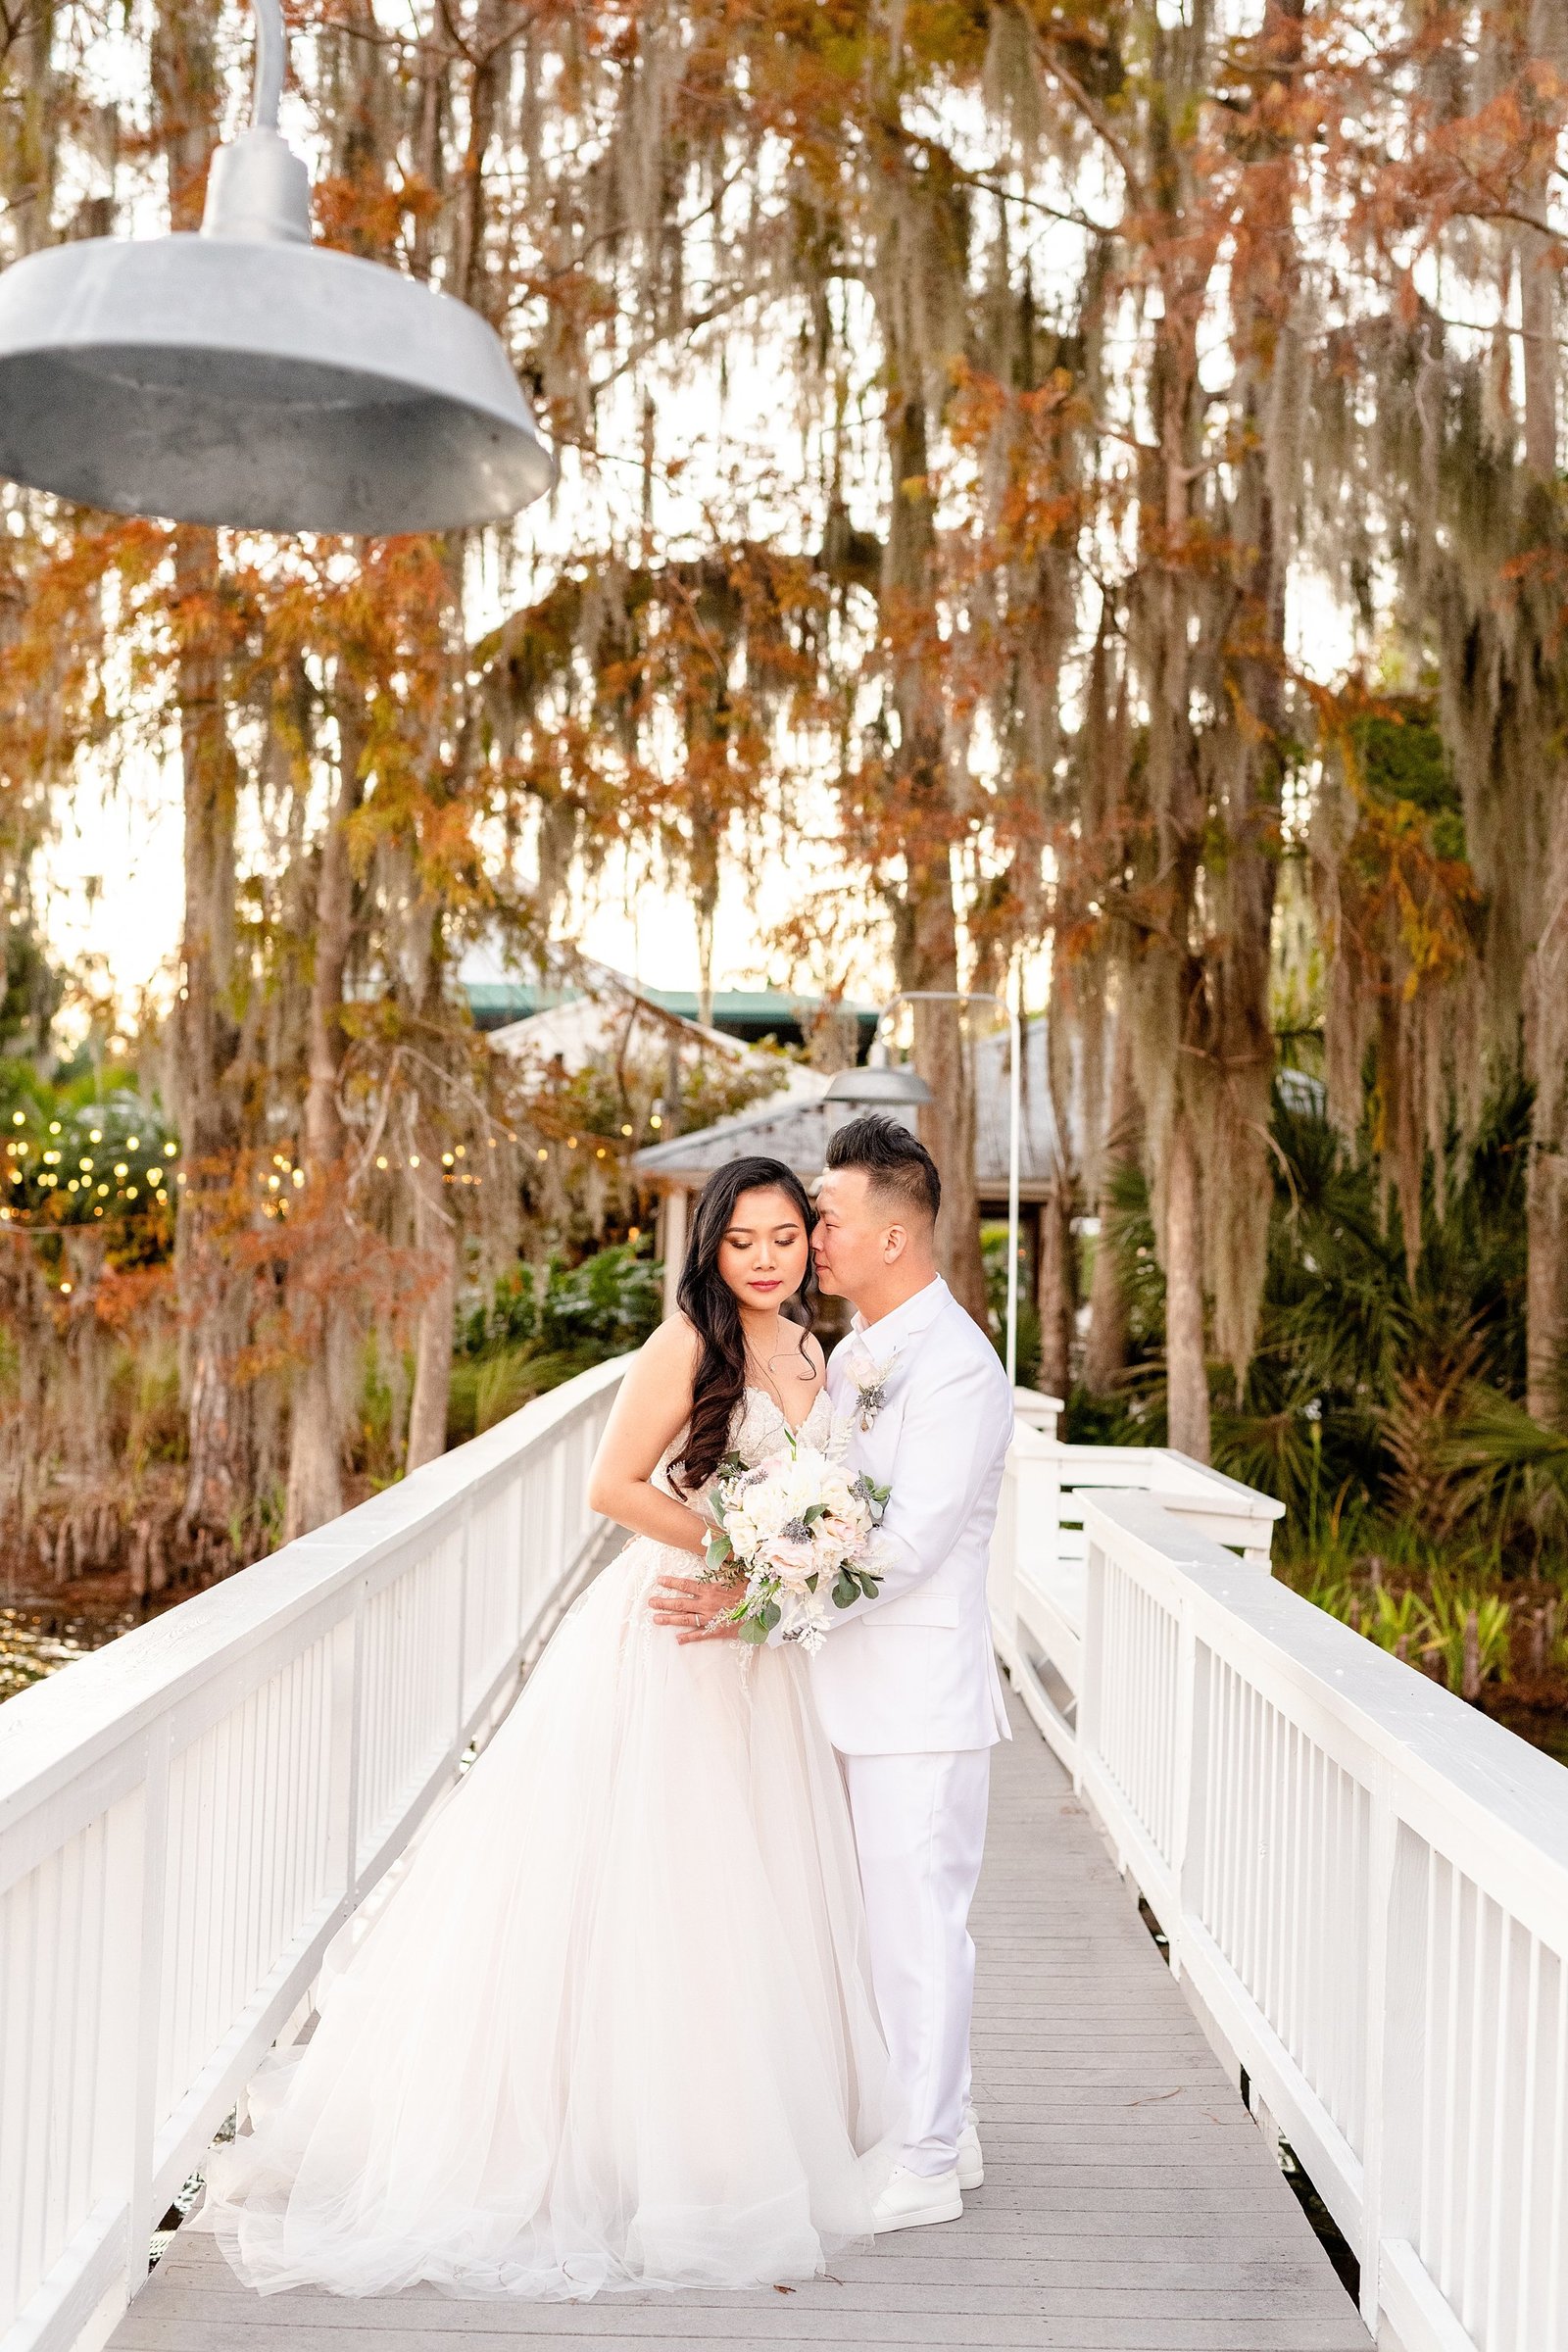 Wedding on a Lake | Orlando Wedding Photographer